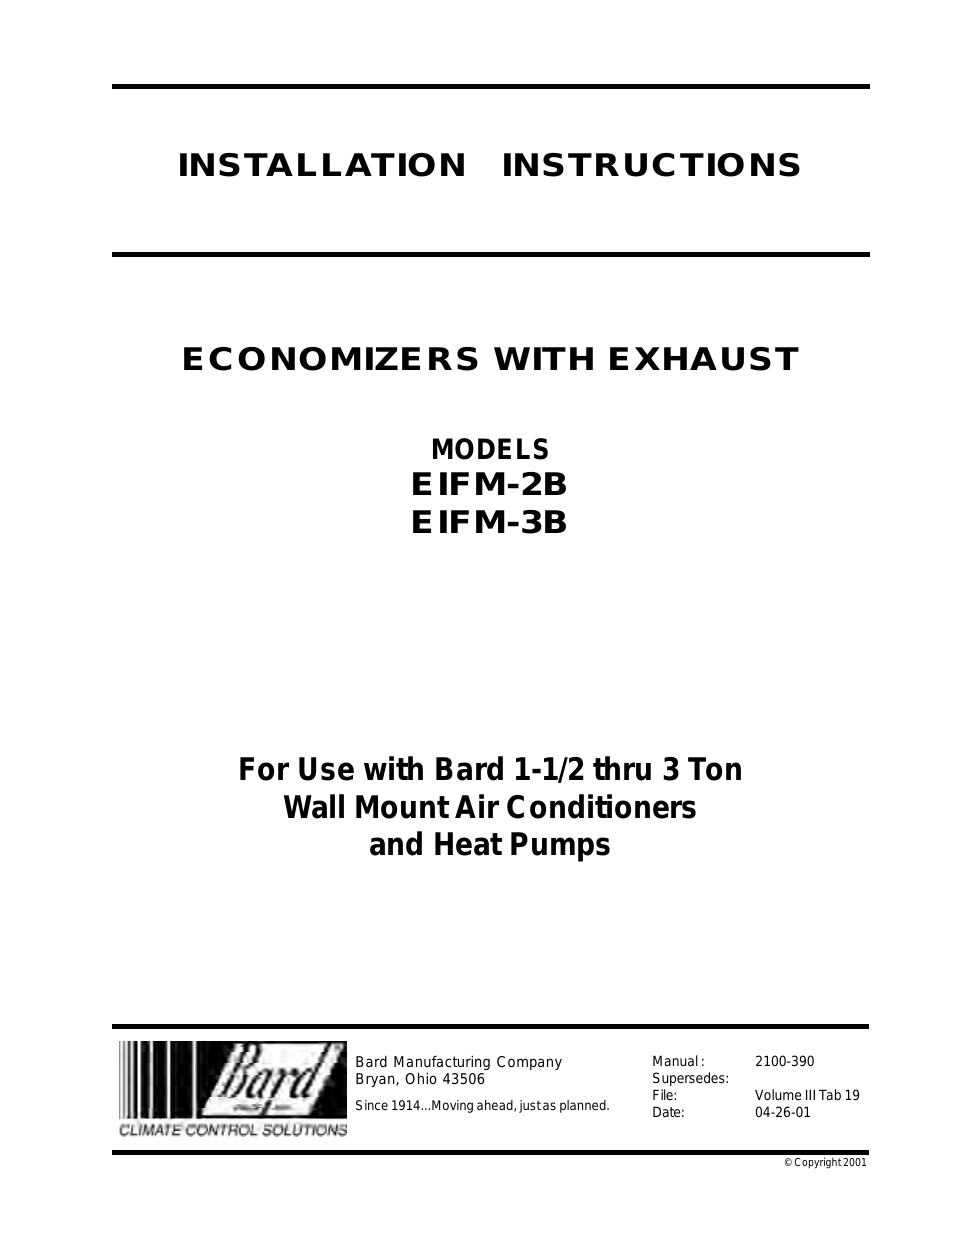 Economizers With Exhaust EIFM-2B